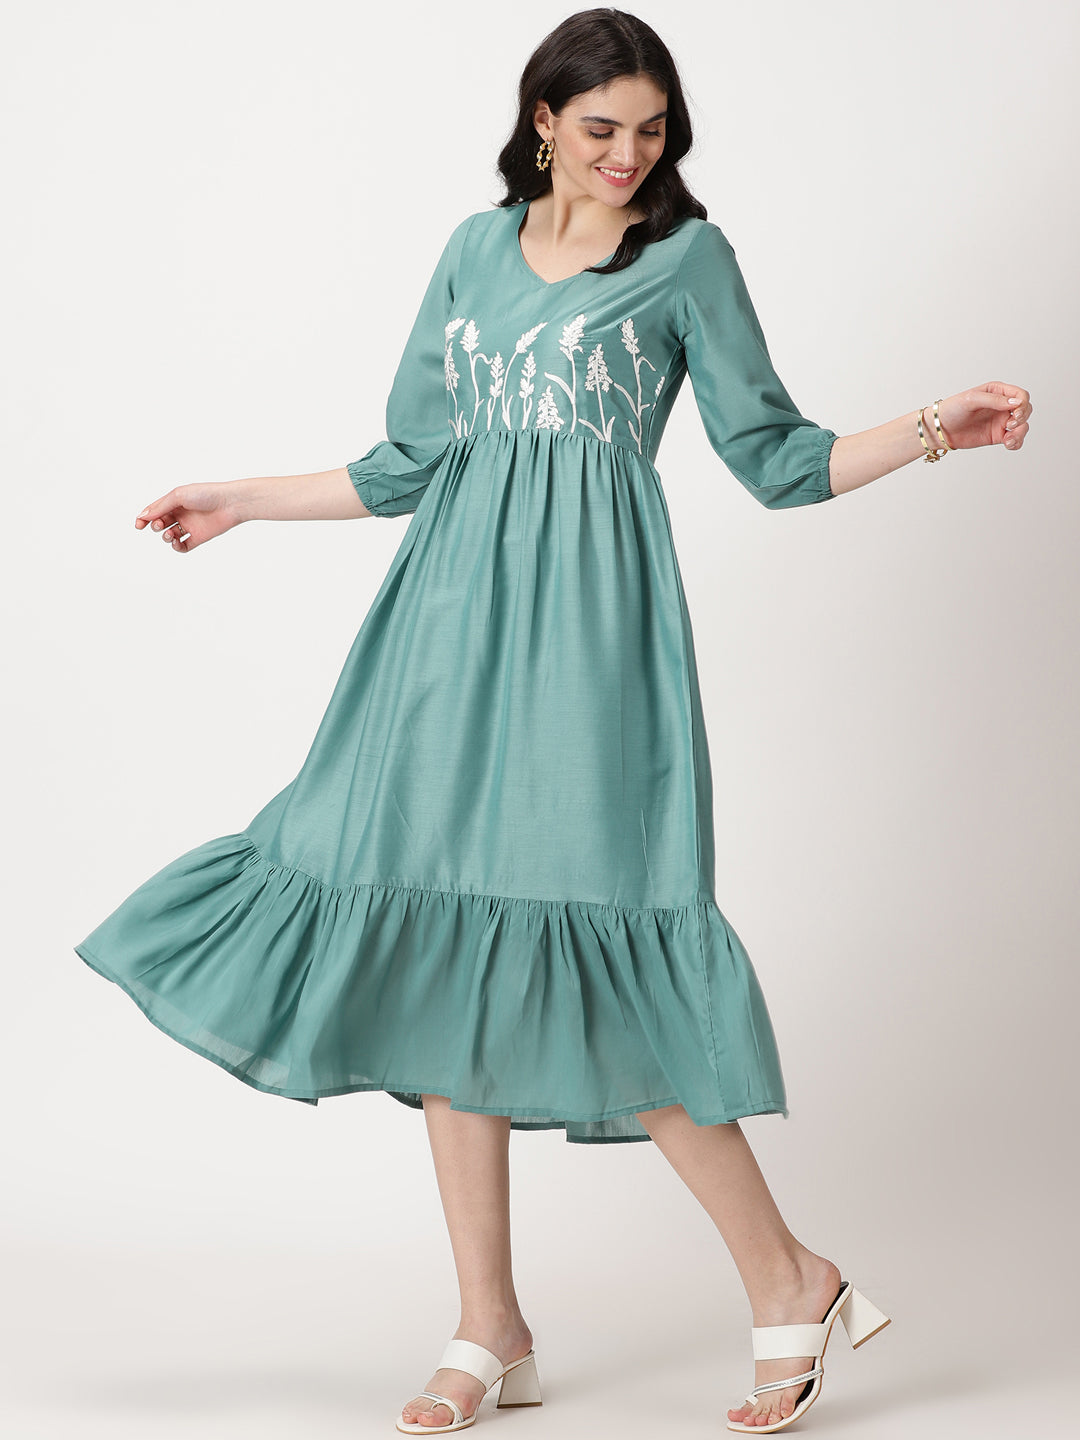 Green Girls Dresses - Buy Trendy Green Girls Dresses Online in India |  Myntra